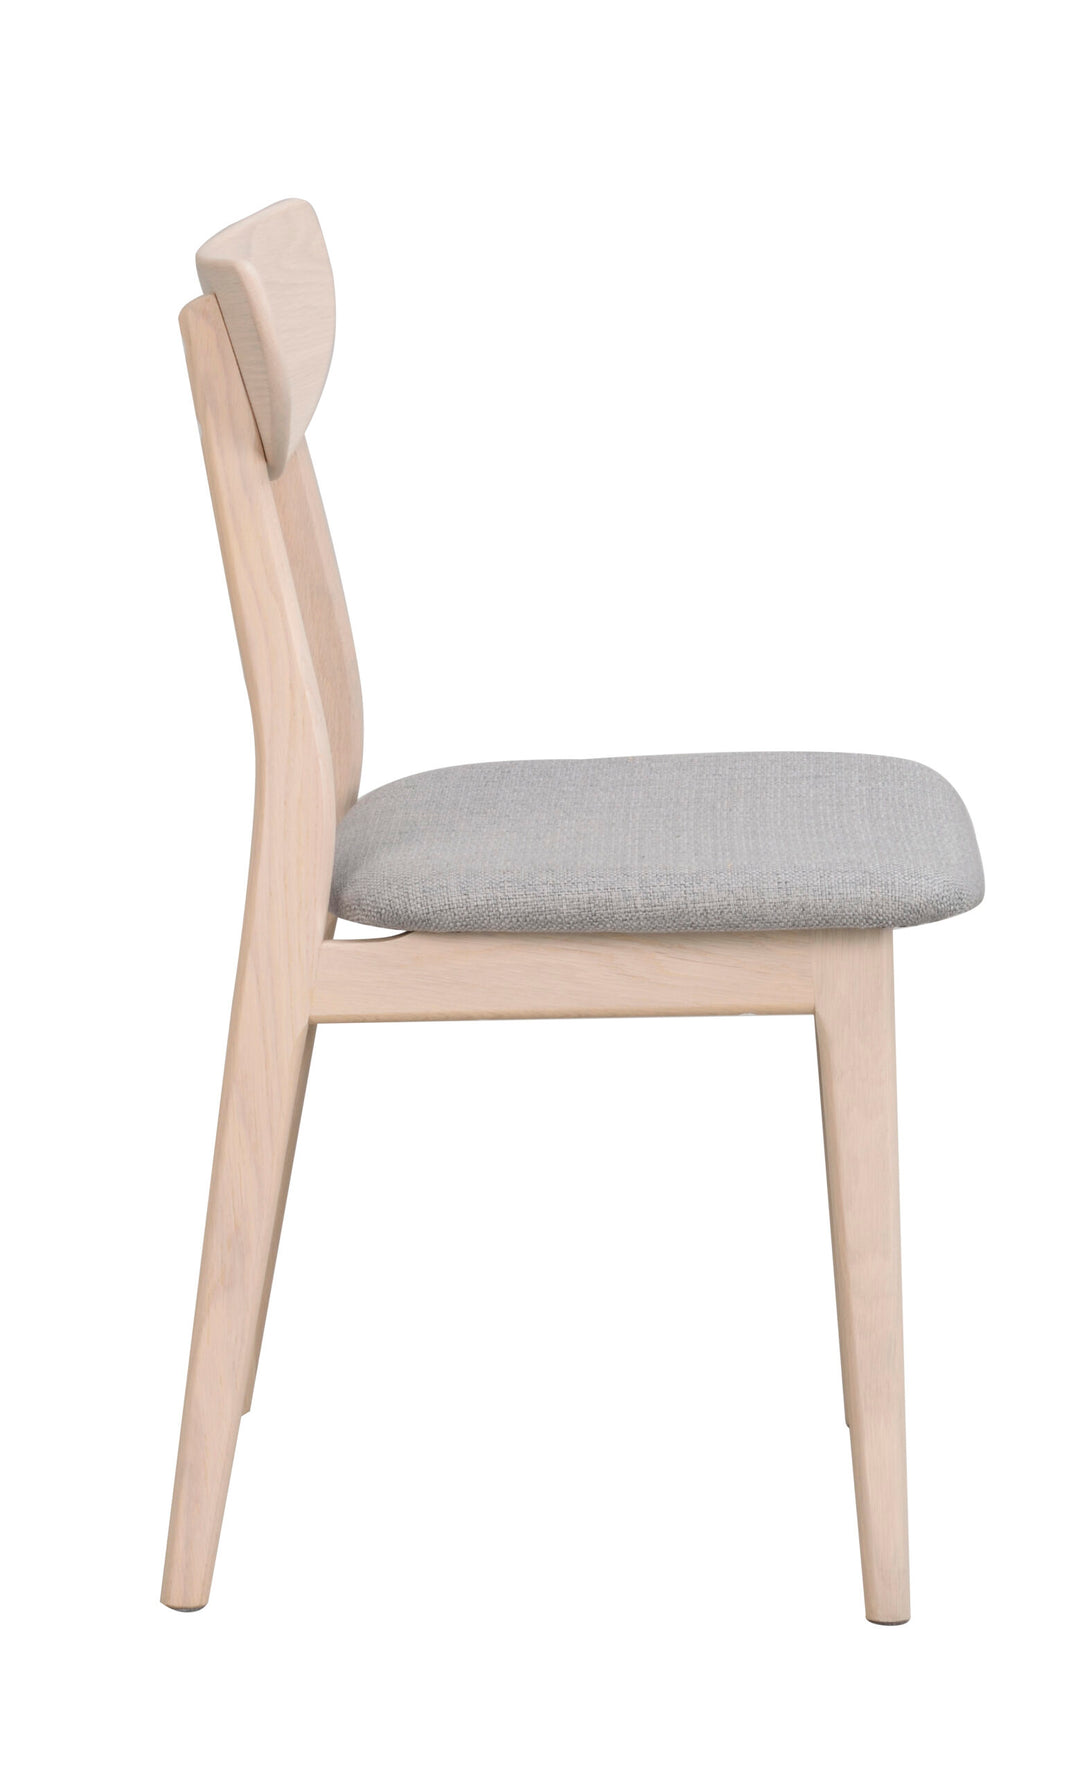 120066_c, Rodham chair, whitepigm. oak_grey